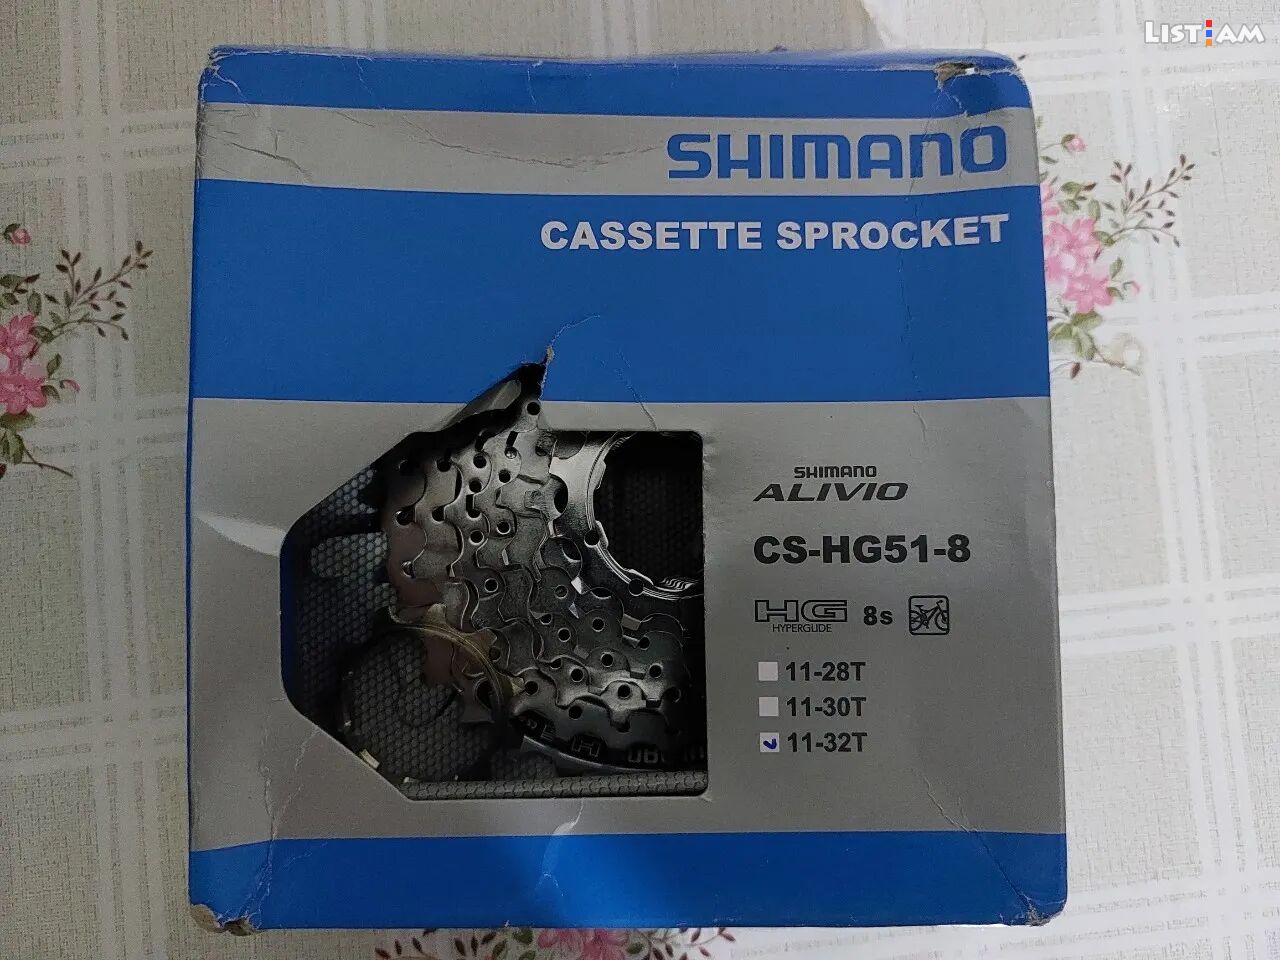 Shimano Cassette